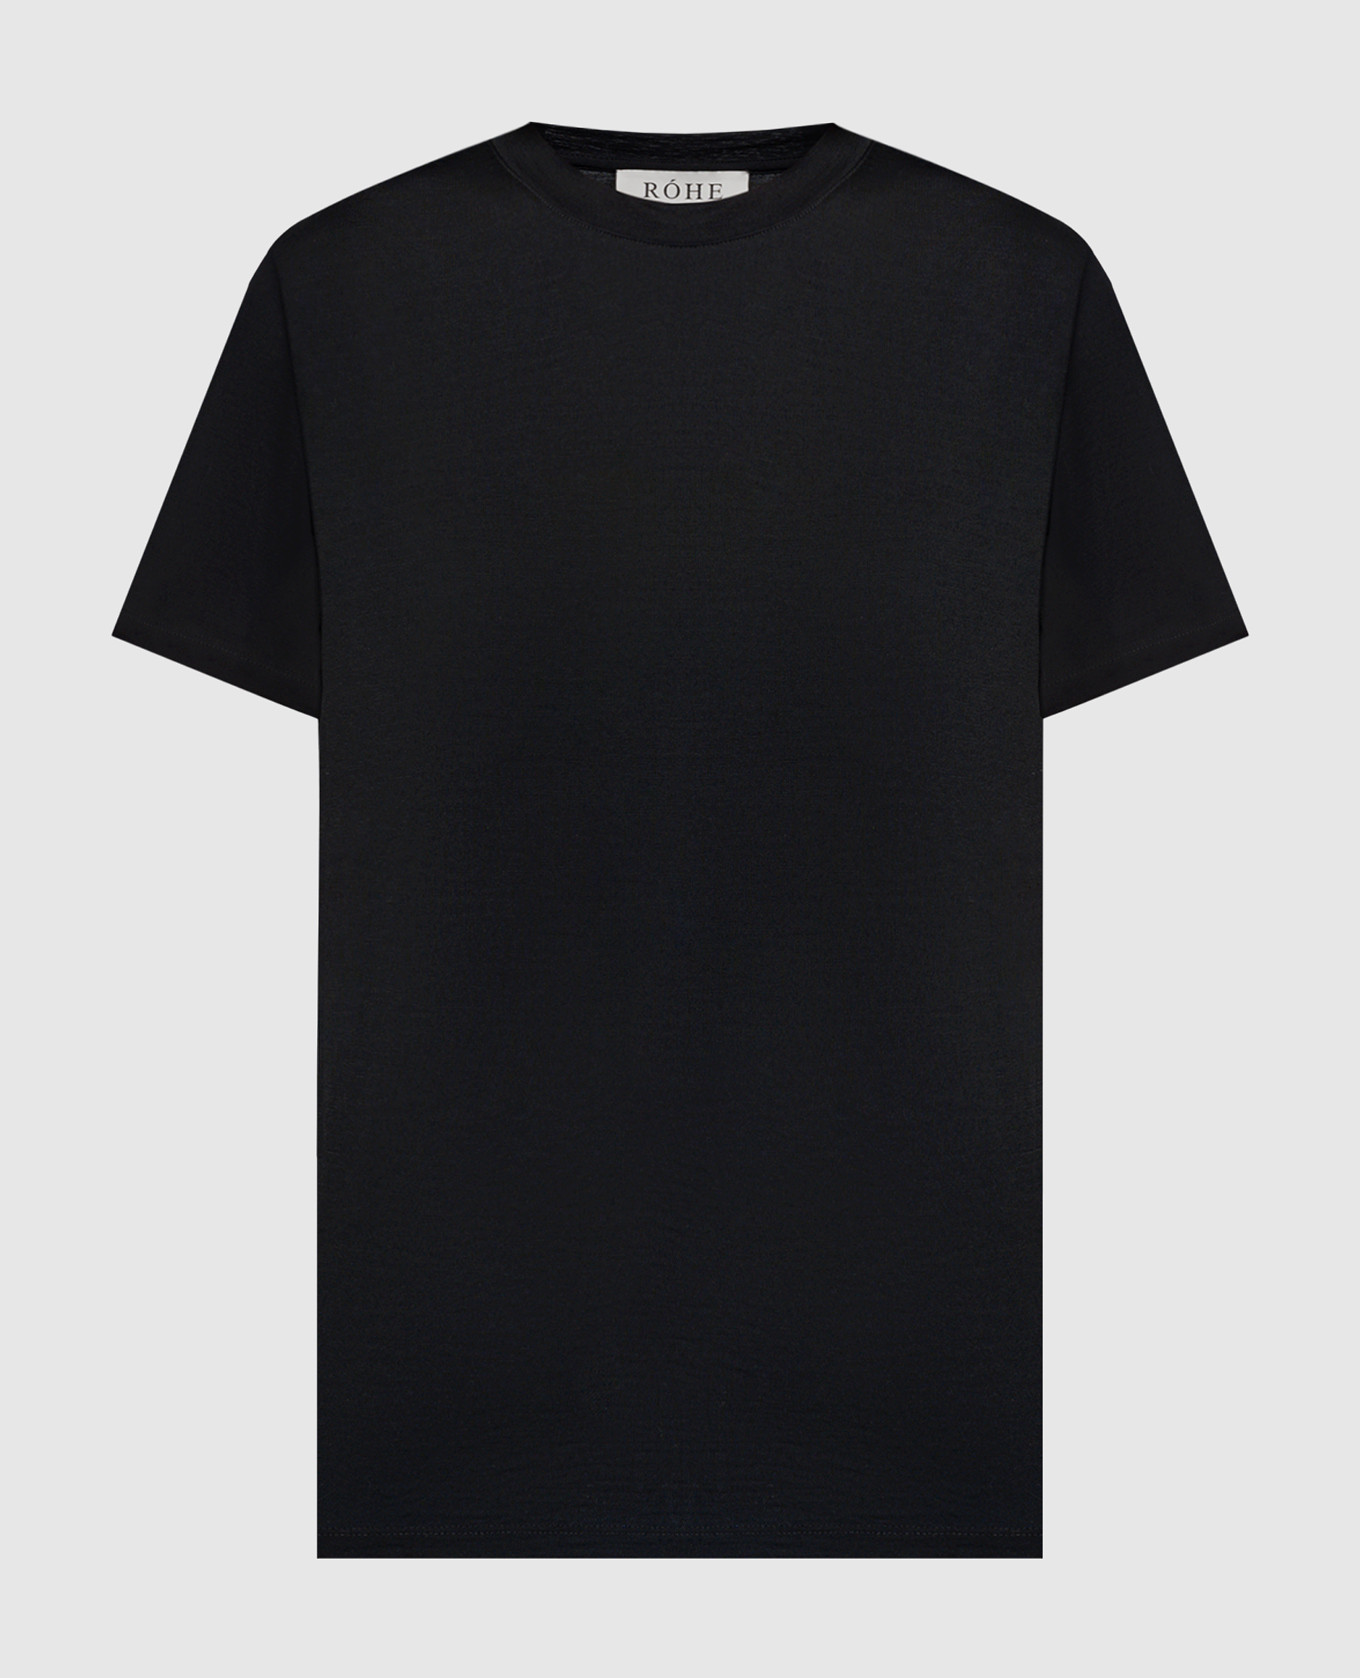 Black T-shirt made of wool